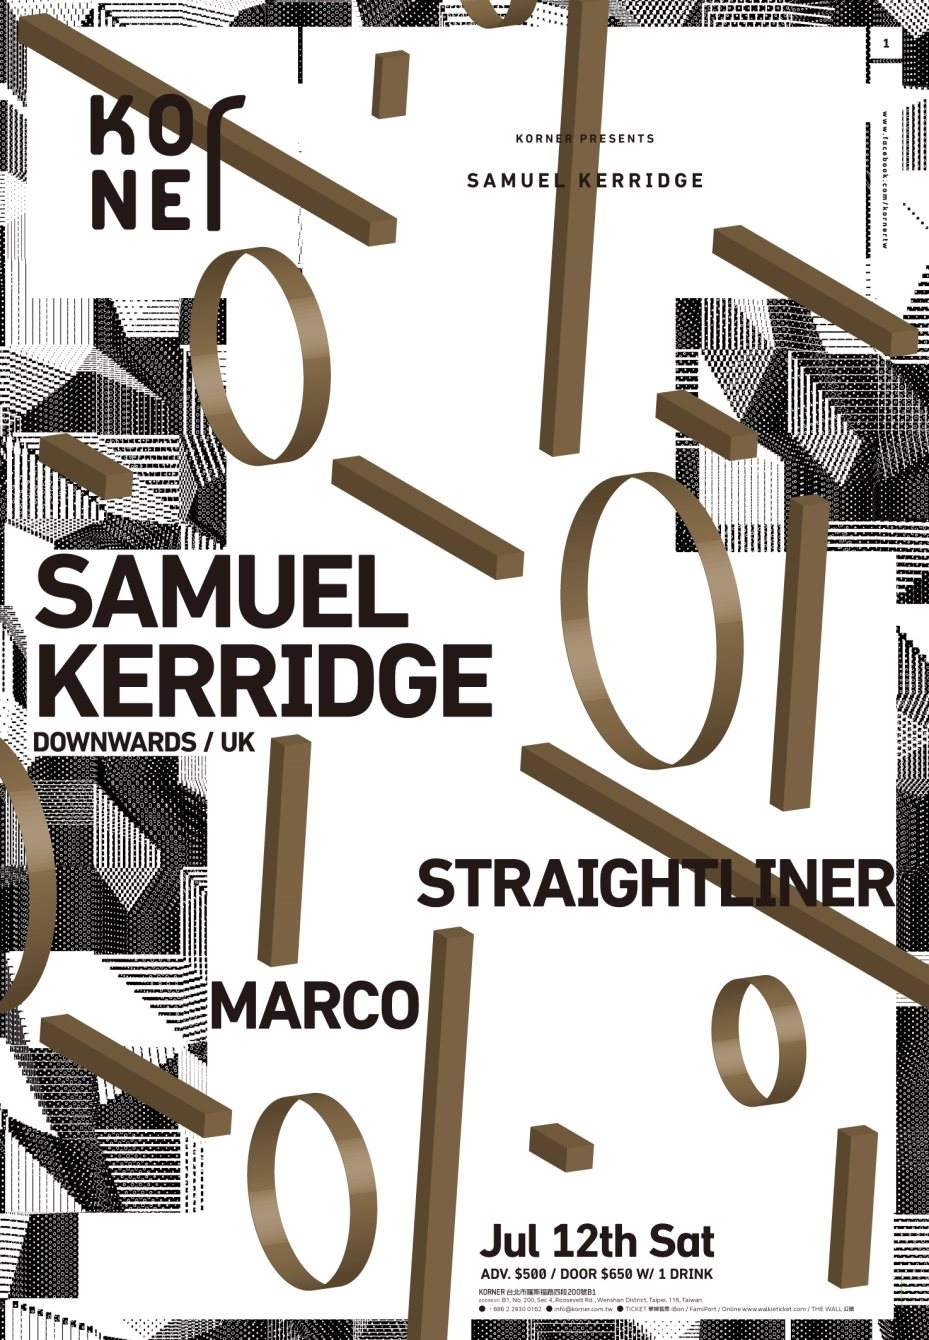 Korner presents Samuel Kerridge - Página frontal